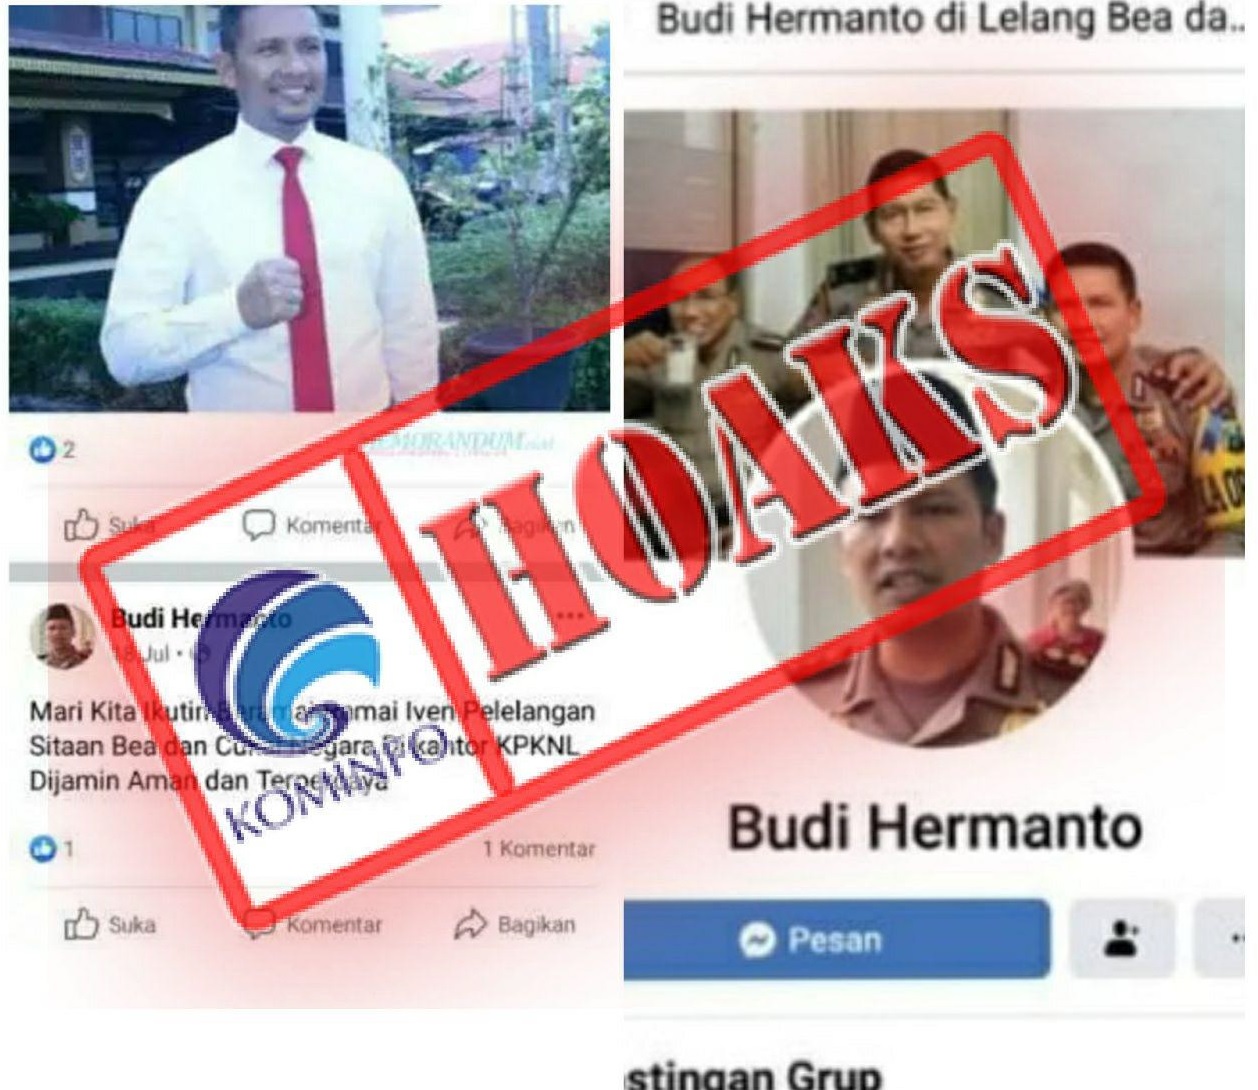 Akun Facebook Mengatasnamakan Kapolresta Malang Kota